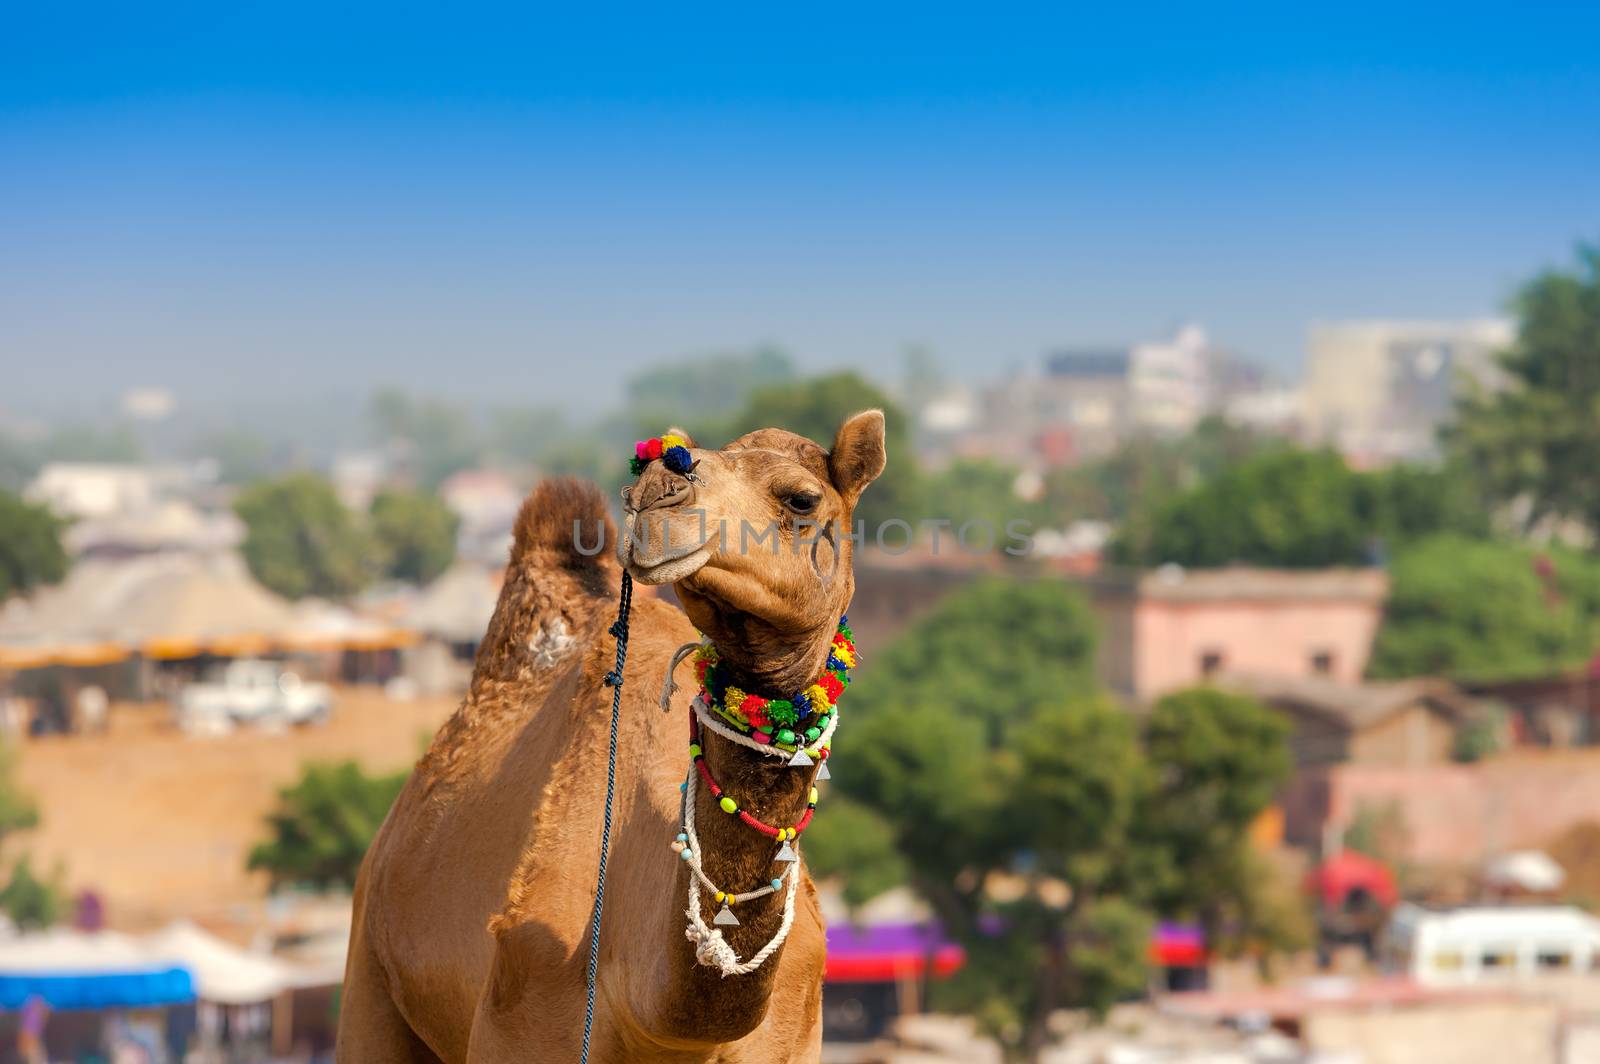 Decorated camel at the Pushkar fair. Rajasthan, India by vladimir_sklyarov